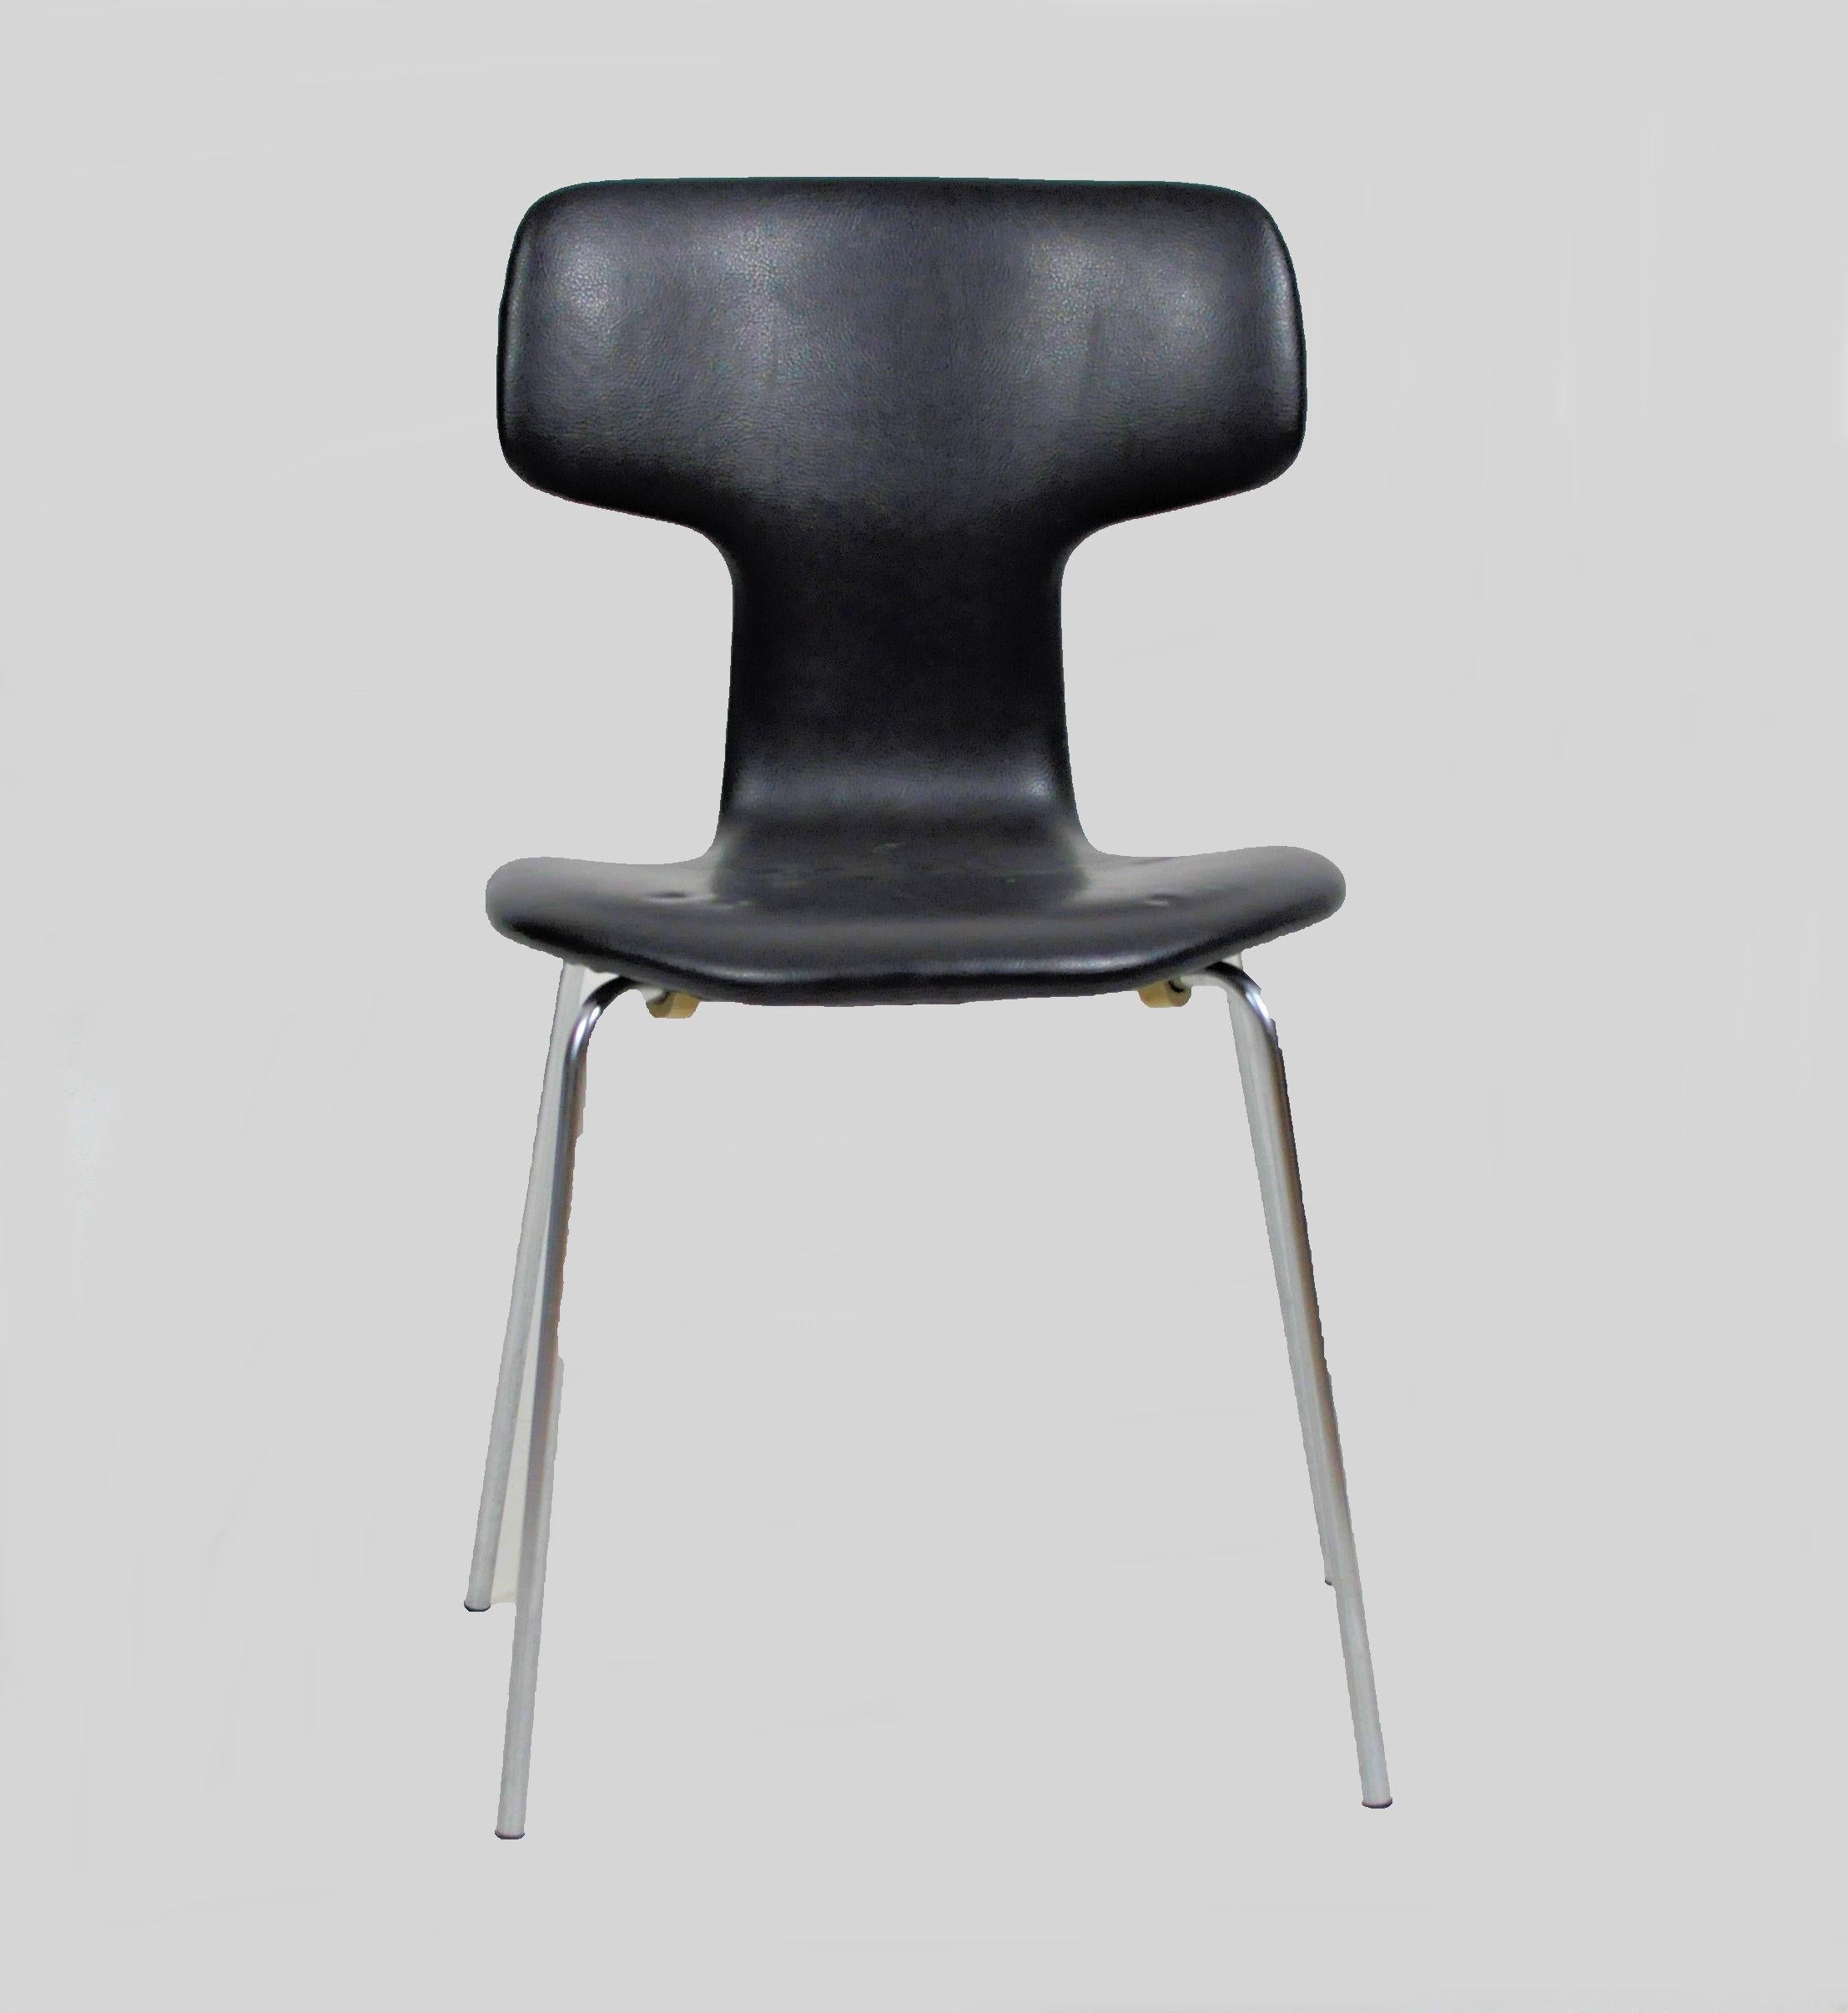 1960s Arne Jacobsen Set of Six T Chairs or Hammer Chairs by Fritz Hansen

Set of six Danish vintage, Arne Jacobsen model 3103 named 